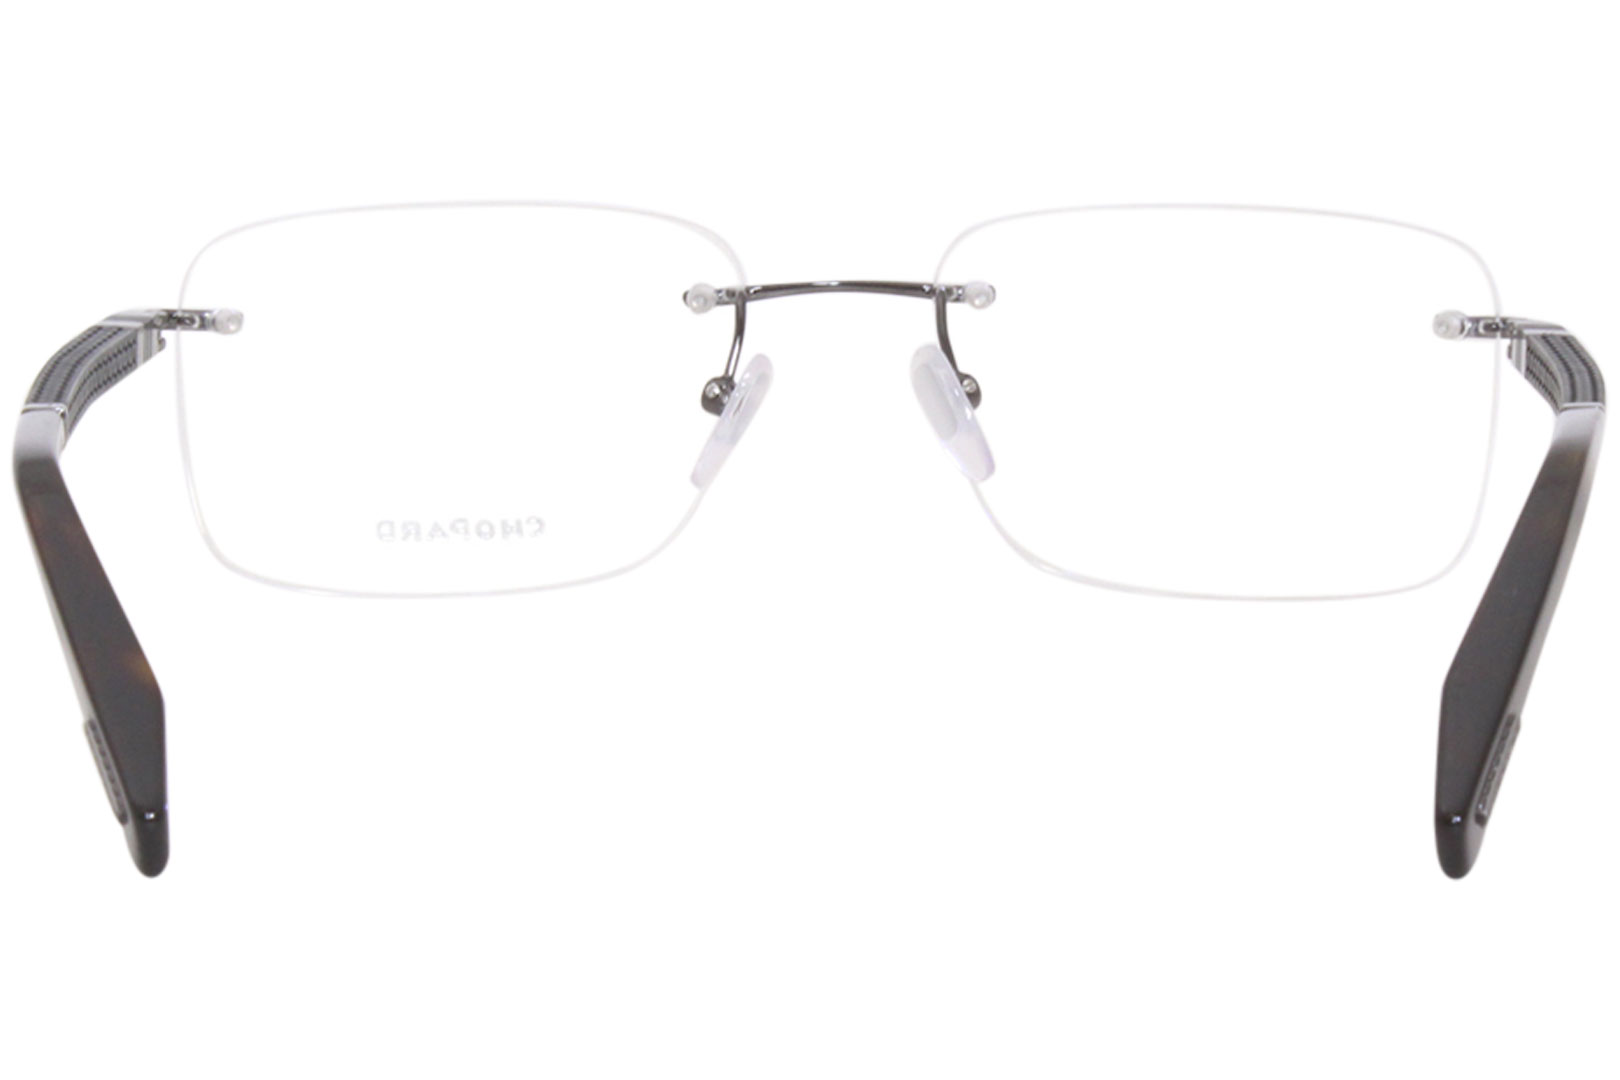 Chopard VCHF58 Eyeglasses Men's Rimless Rectangular Optical Frame ...